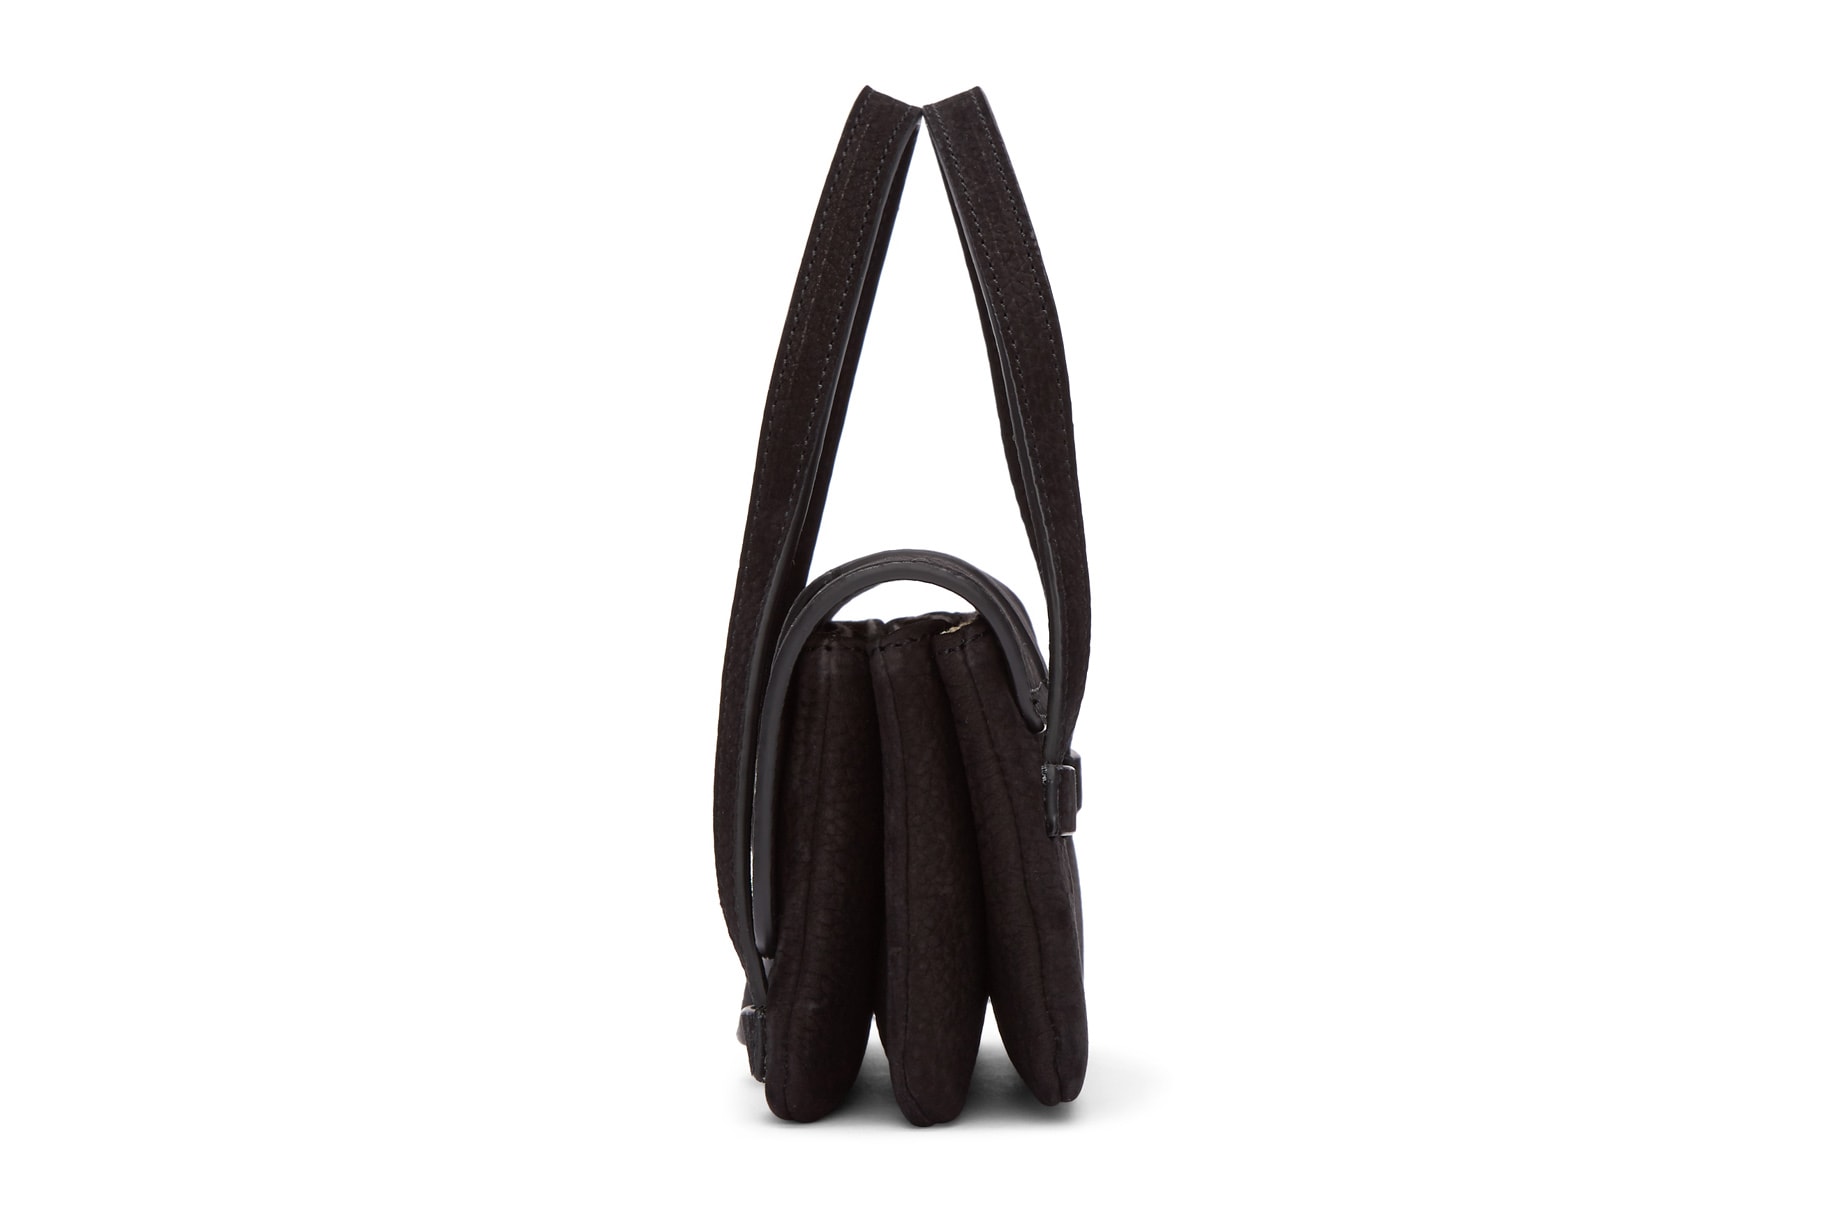 Jacquemus Mini Purse Bag Miniature Accessory Trend Bag Simone Porte Leather Le Minho